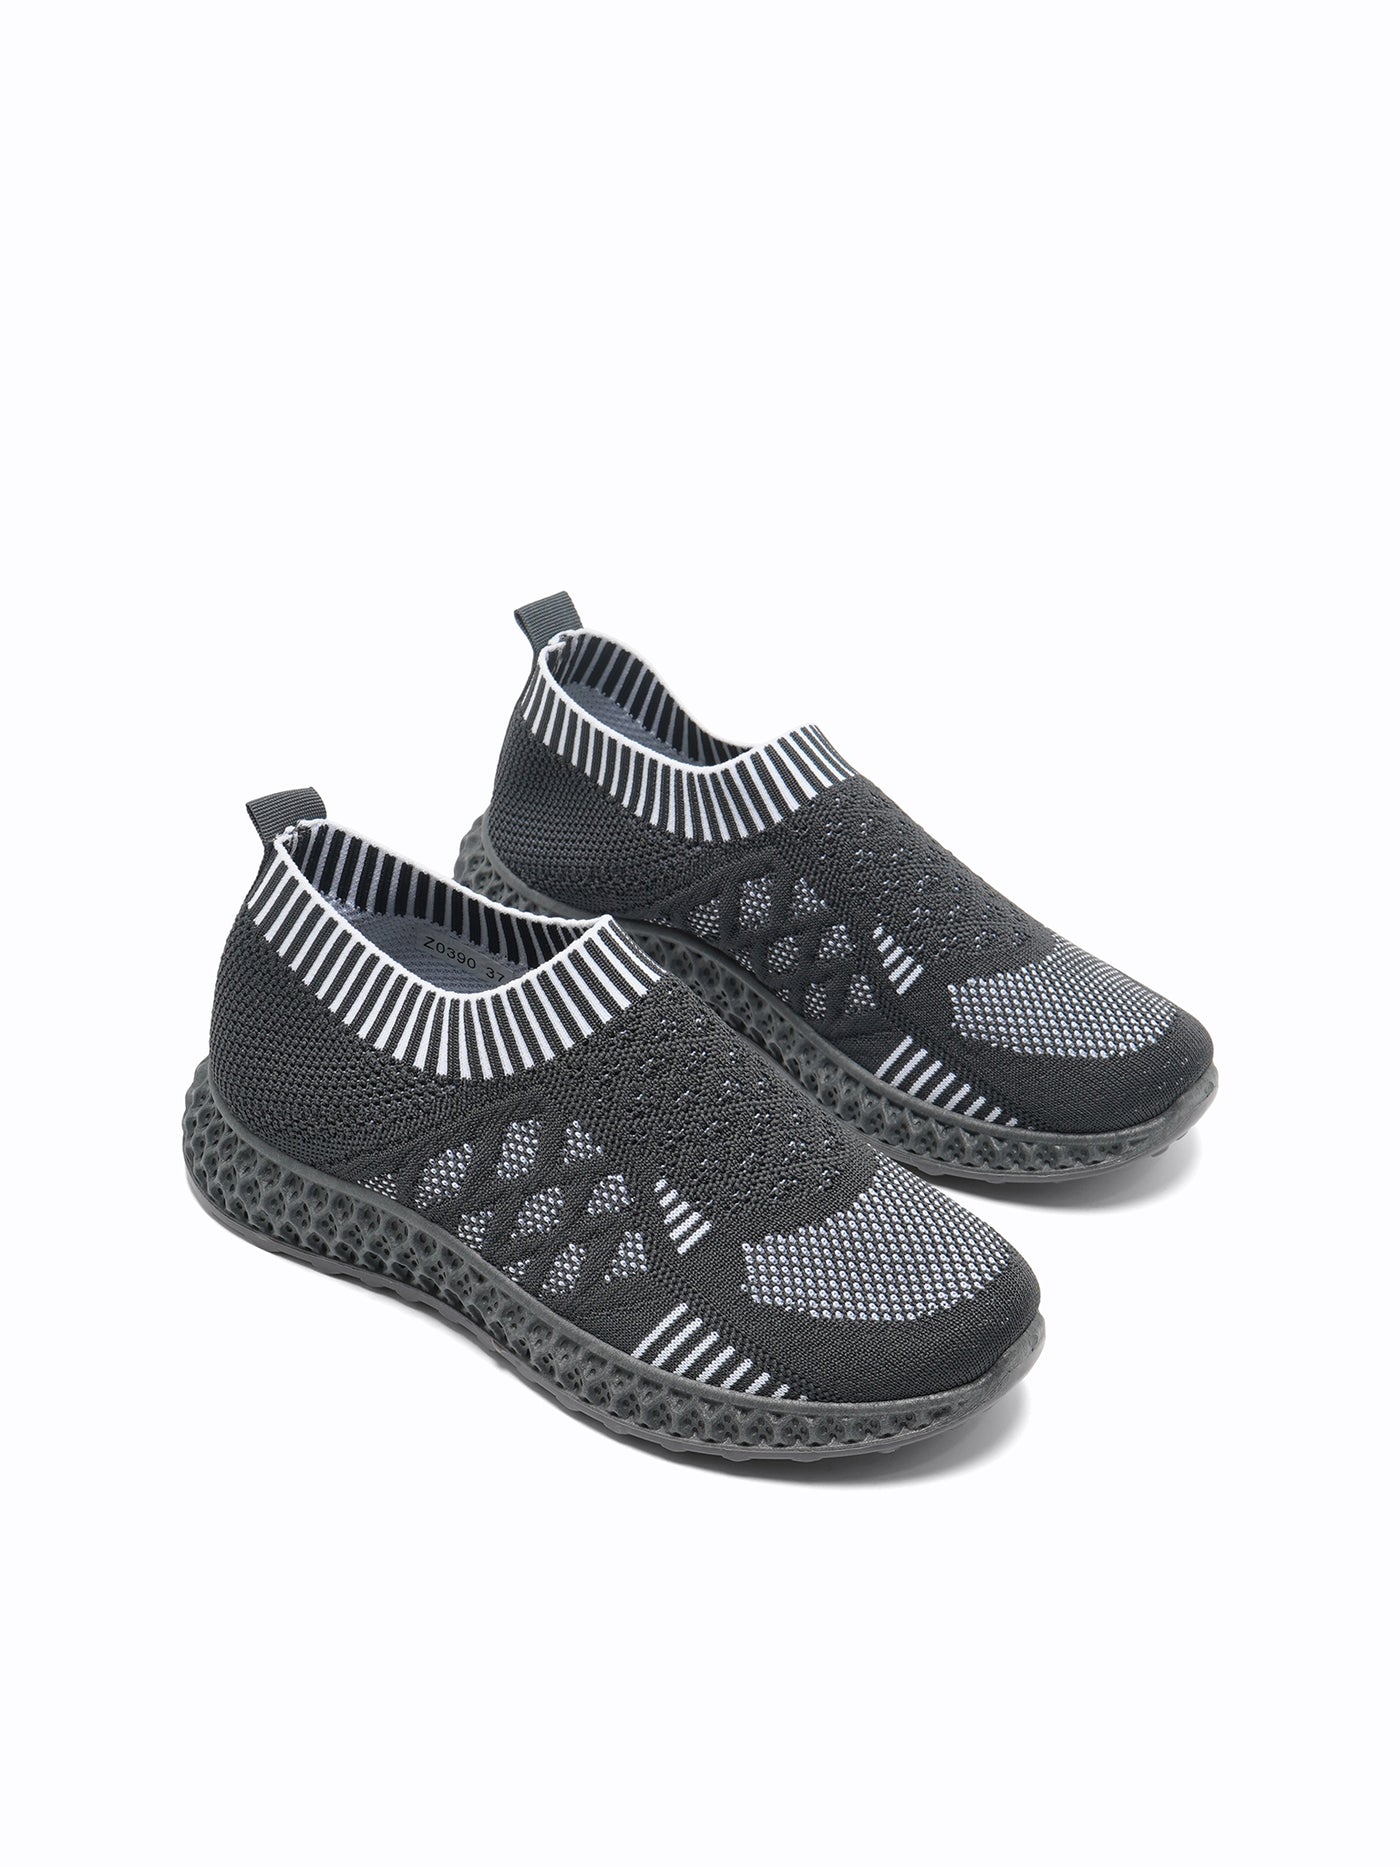 Shubizz Z-0390 Comfort Sneakers